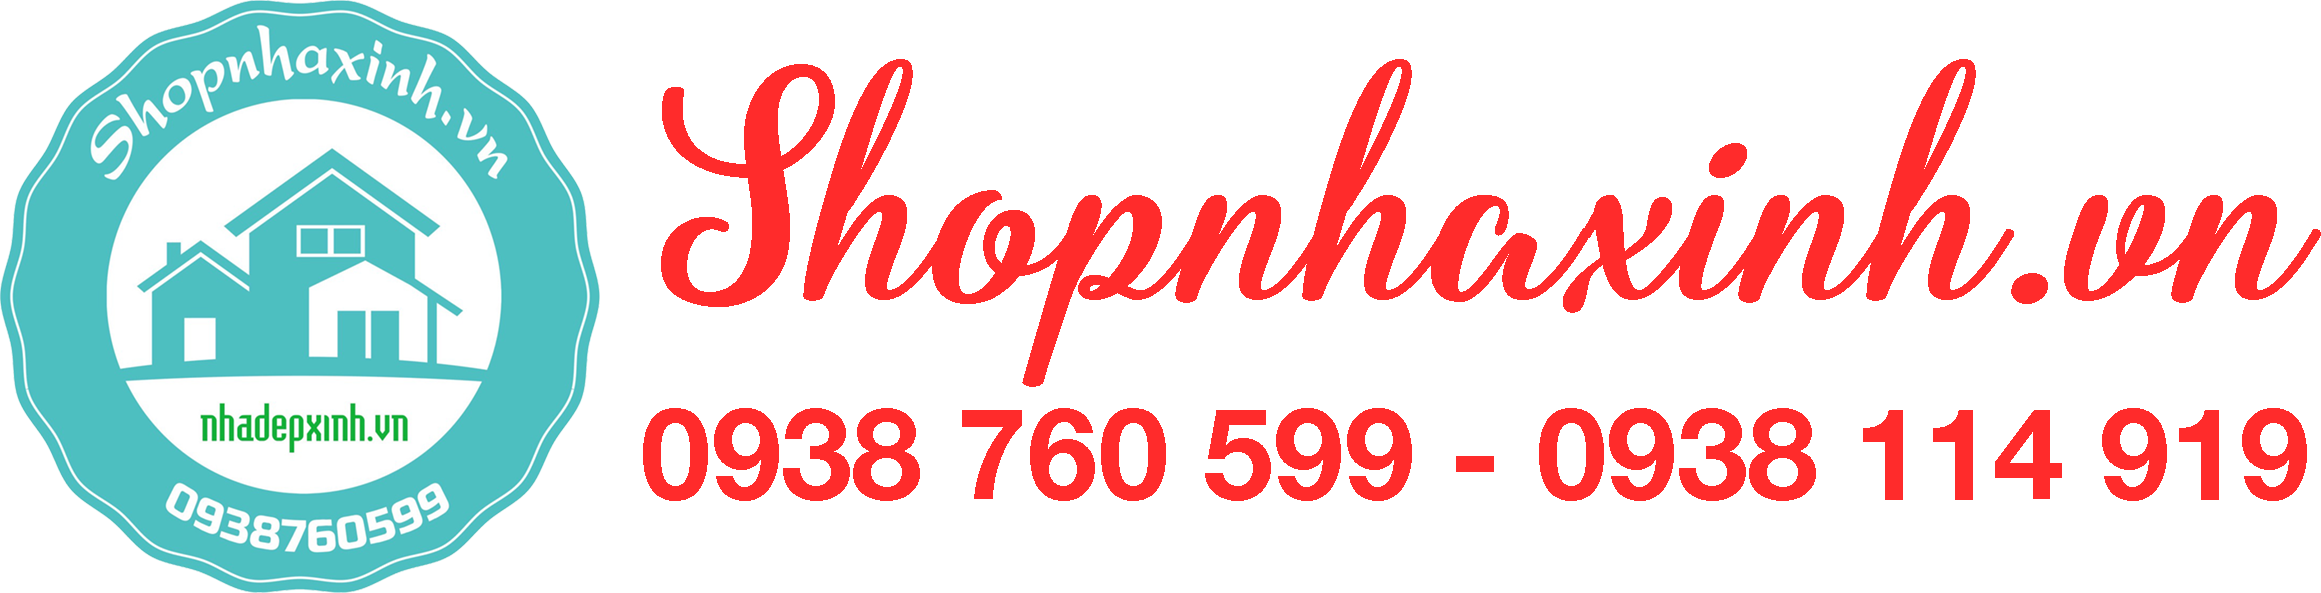 shopnhaxinh.vn.